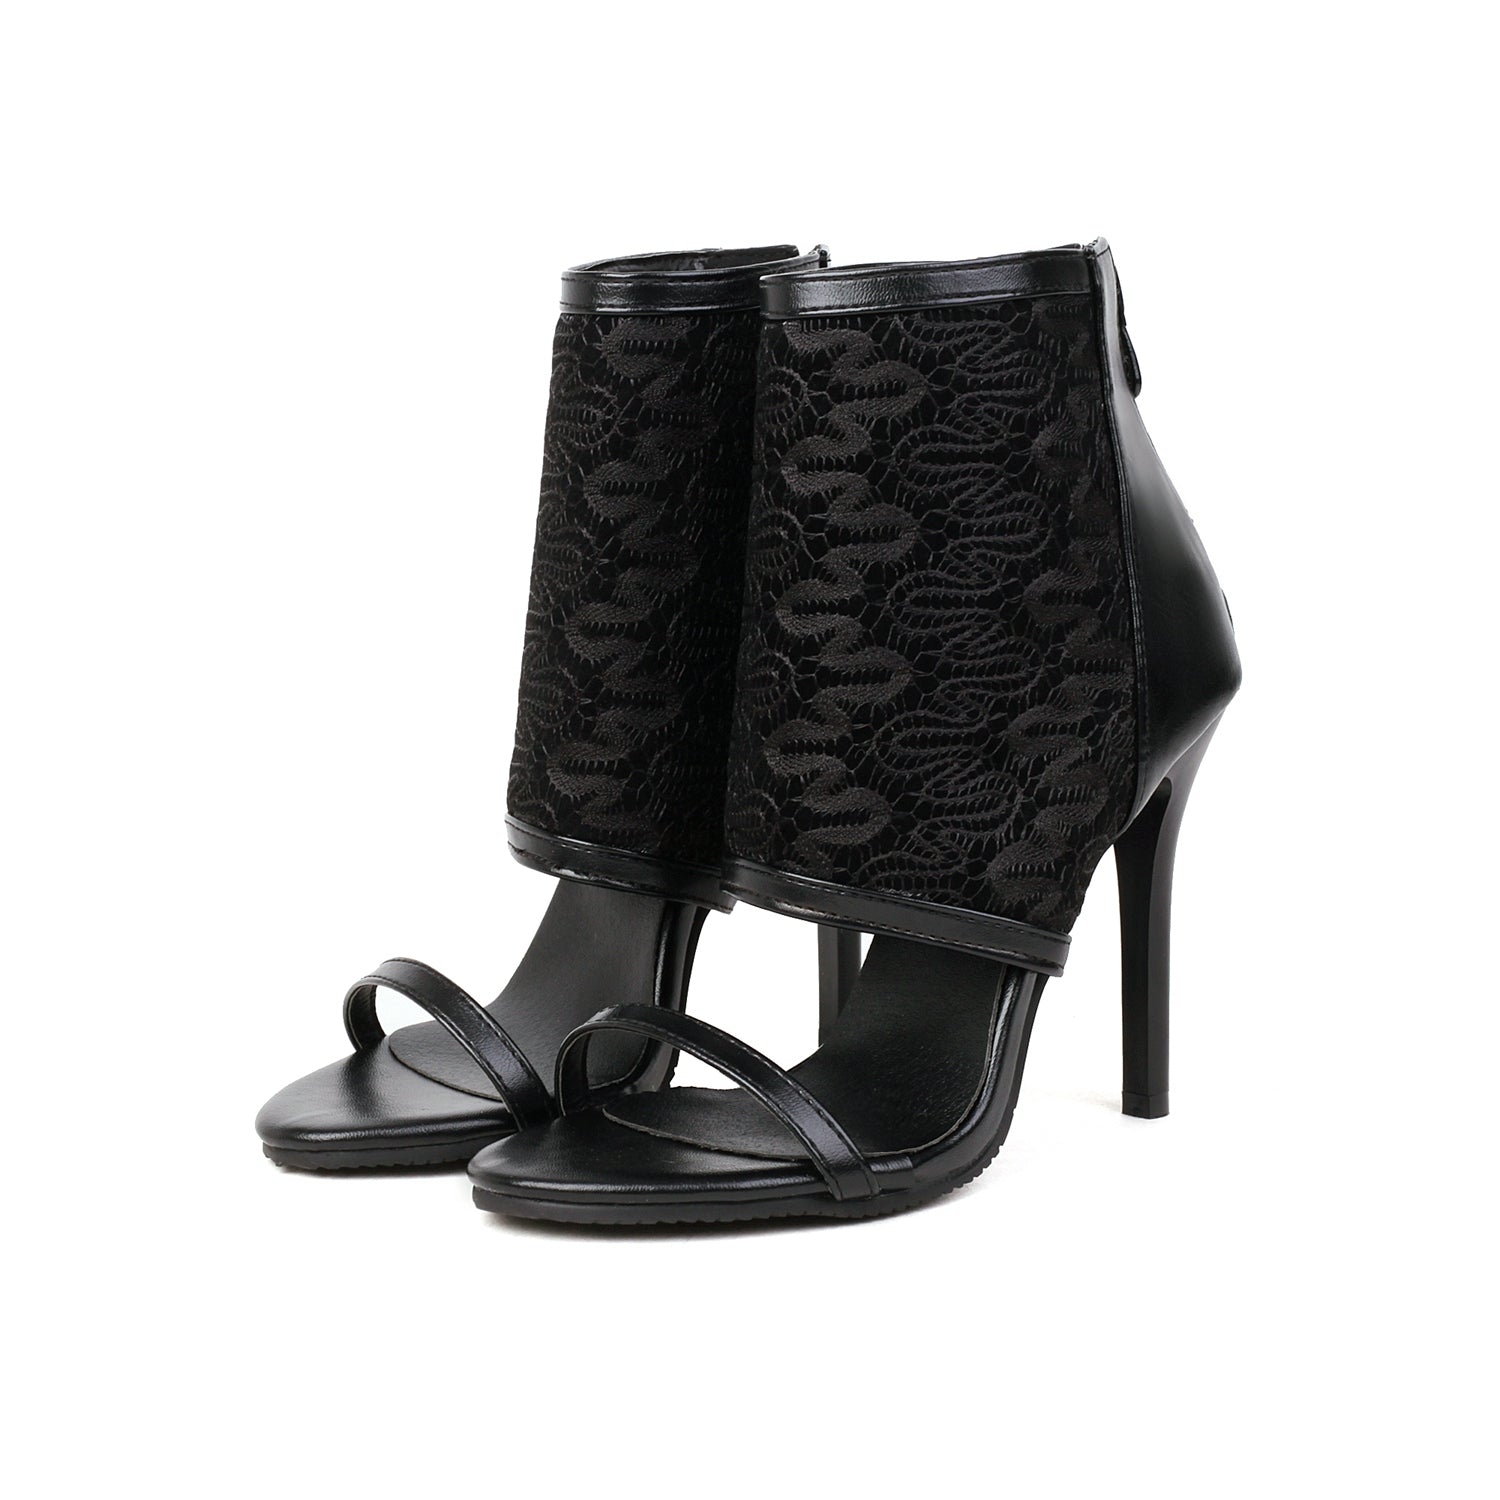 Bigsizeheels Stiletto Heel Zipper Suede Upper Ankle Strap Sandals - Black best oversized womens heels are from bigsizeheel®